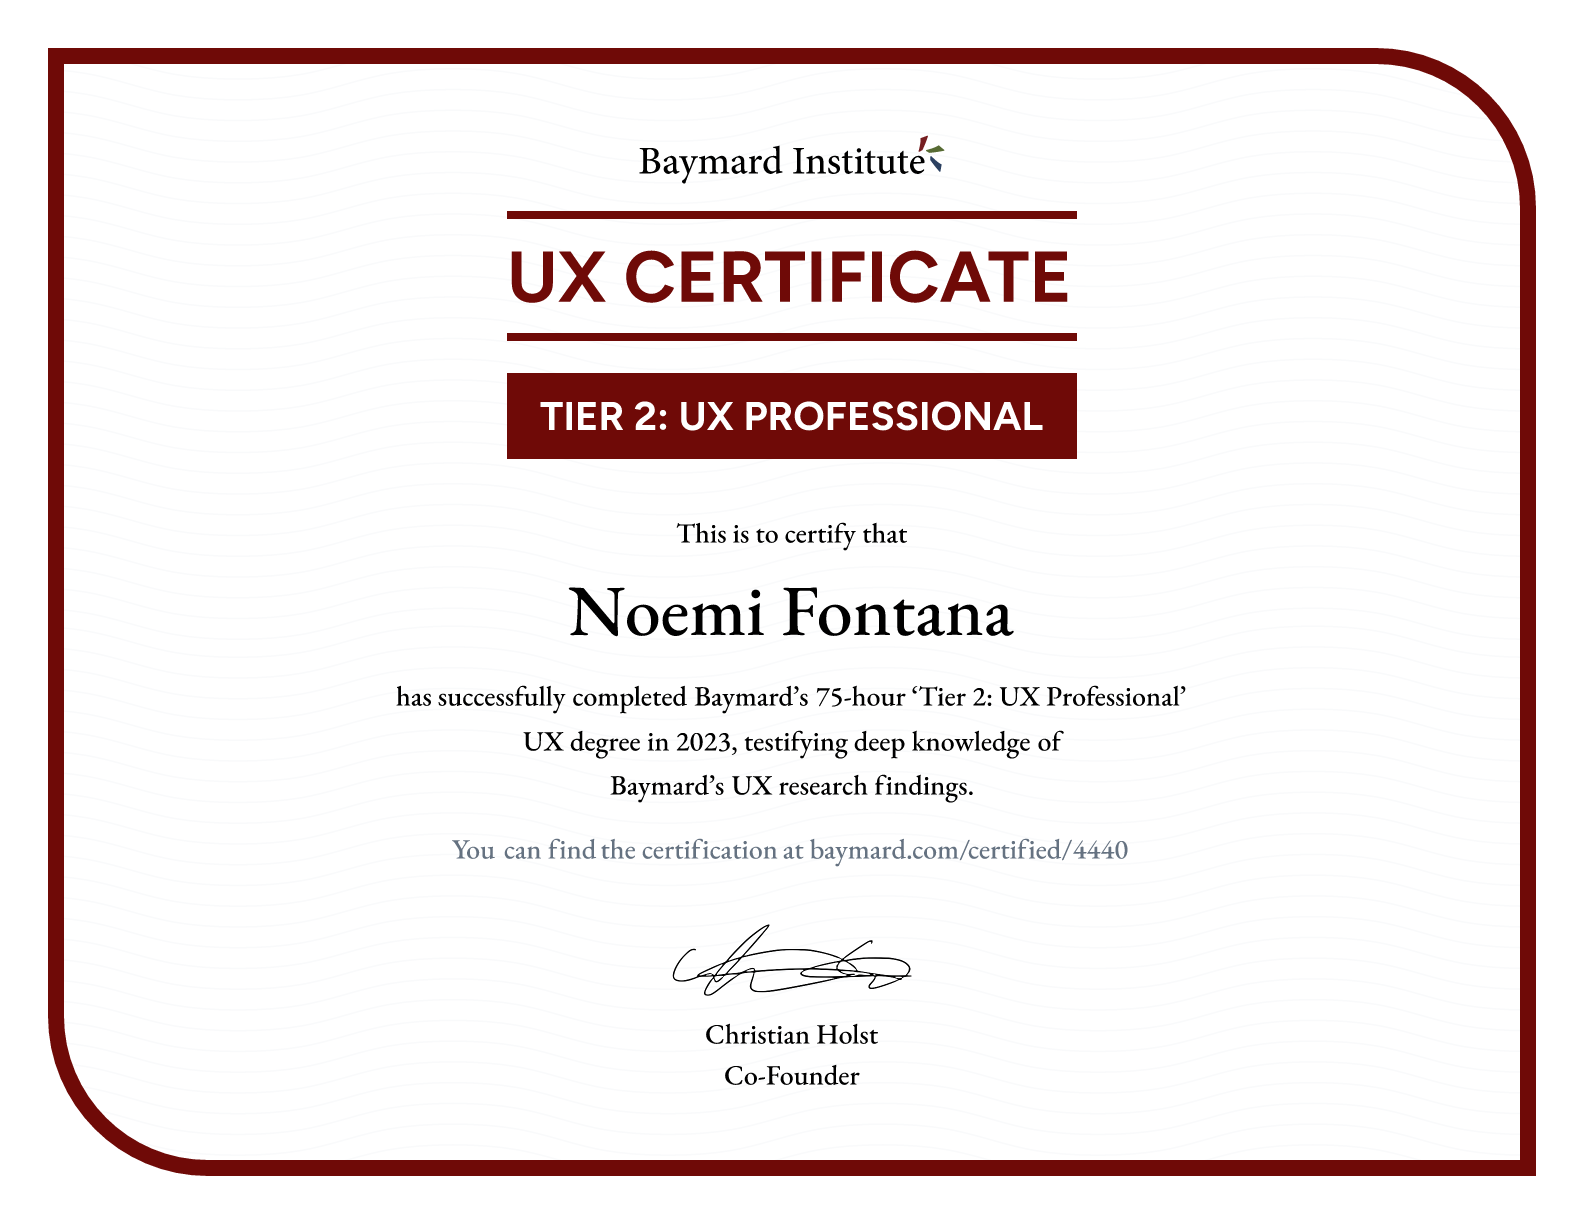 Noemi Fontana’s certificate